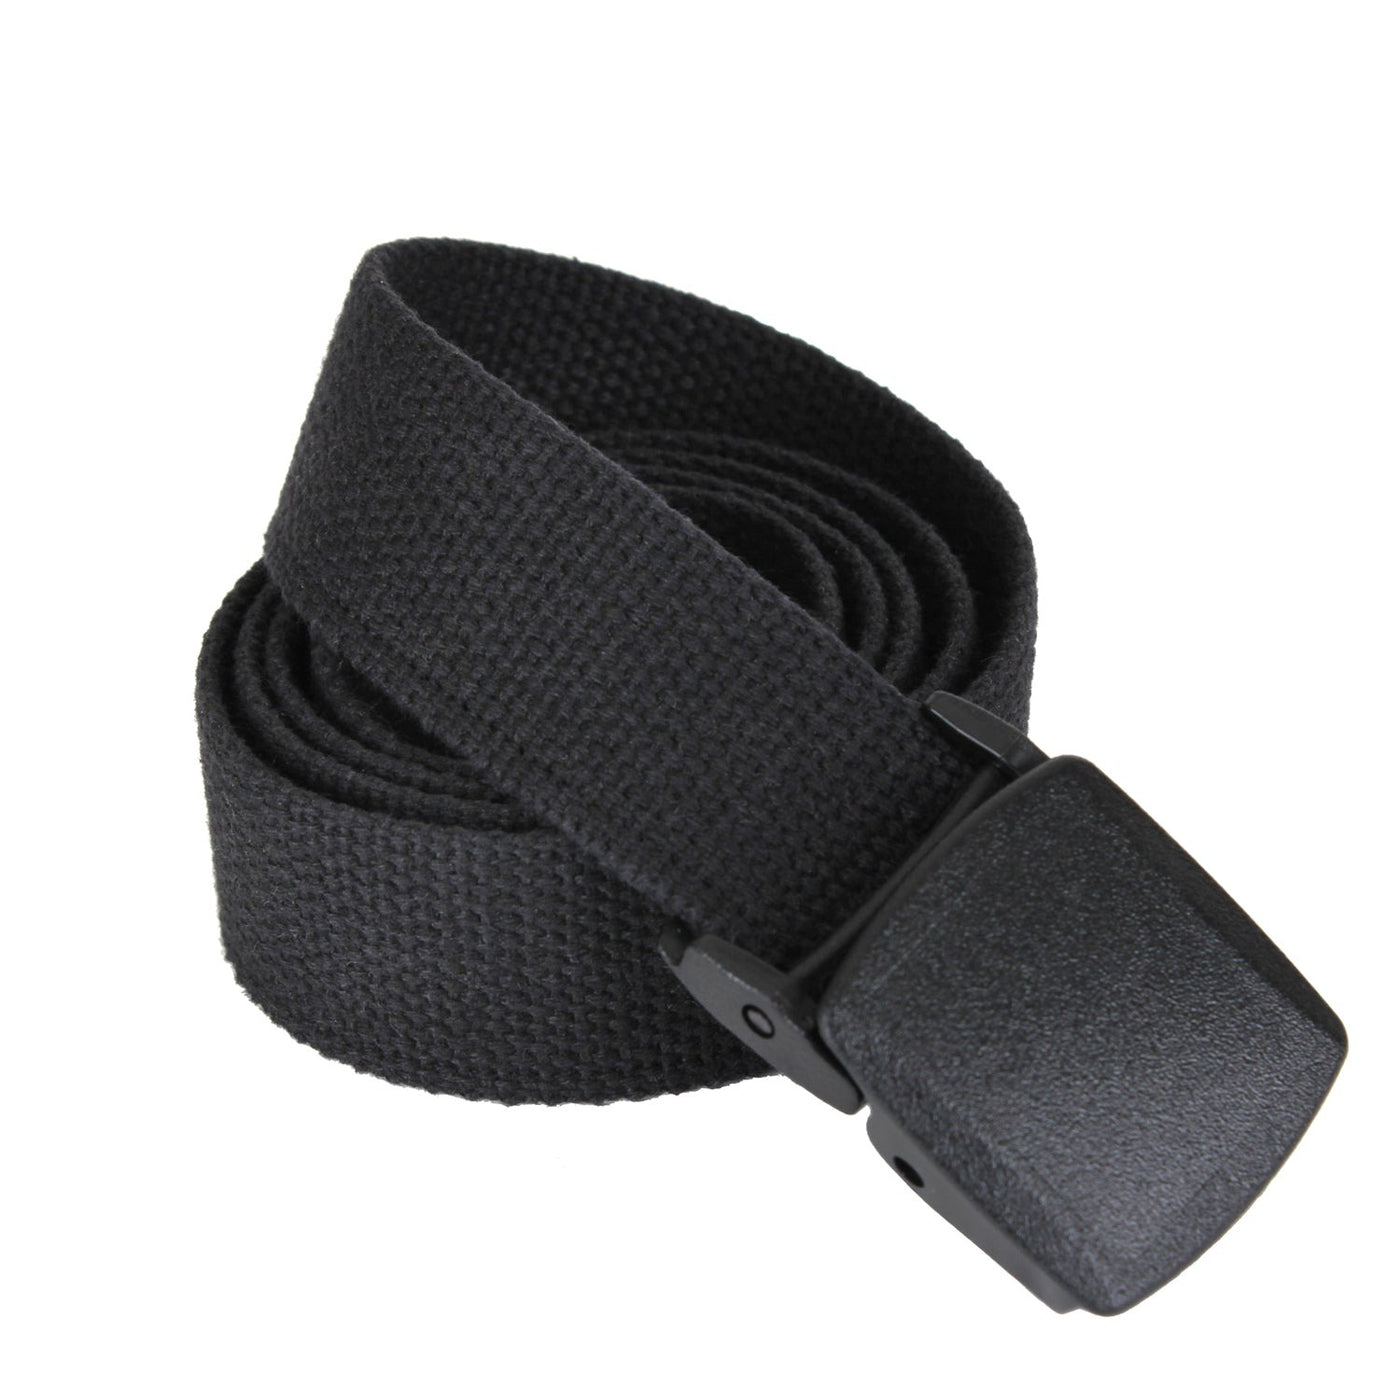 StarBelt Plastic Belt Buckle, Black